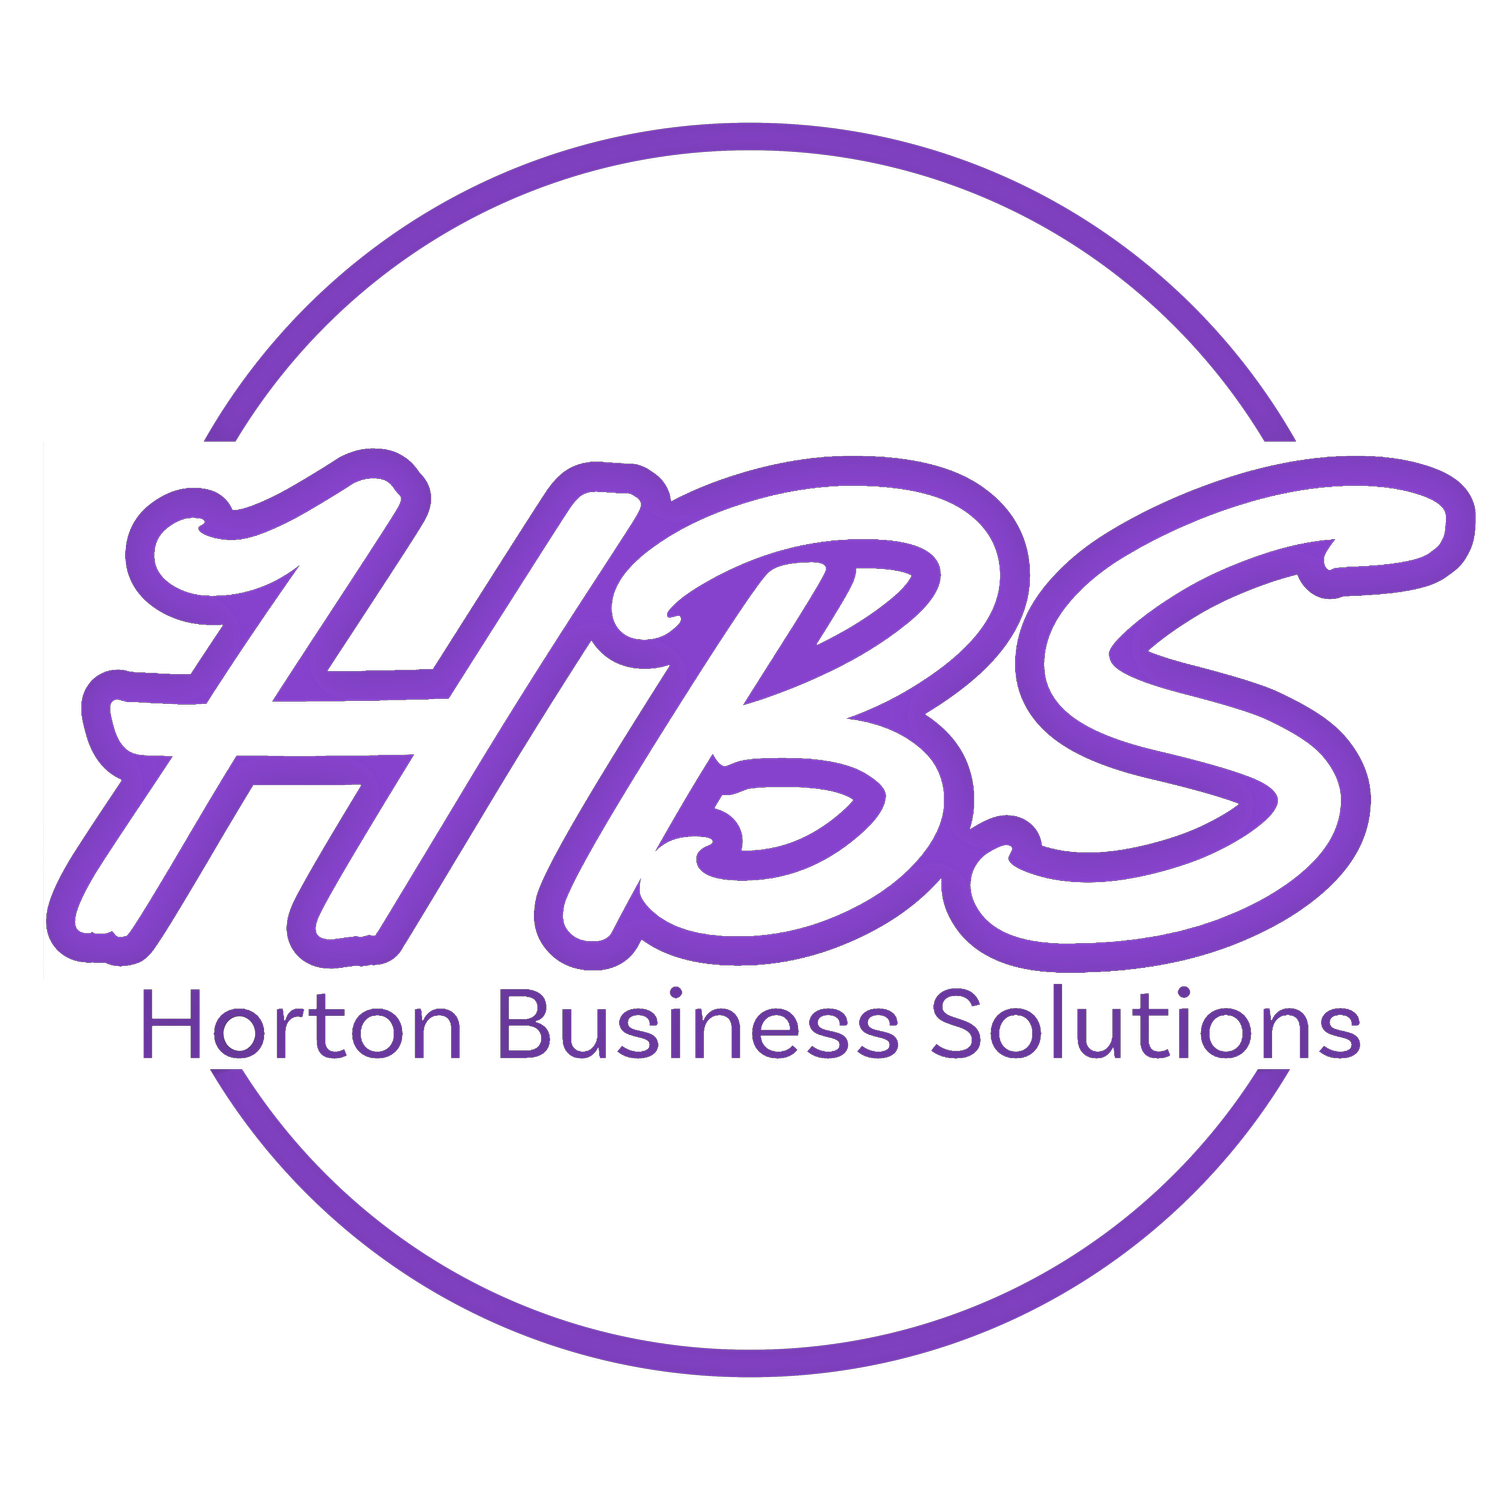 Horton Business Solutions